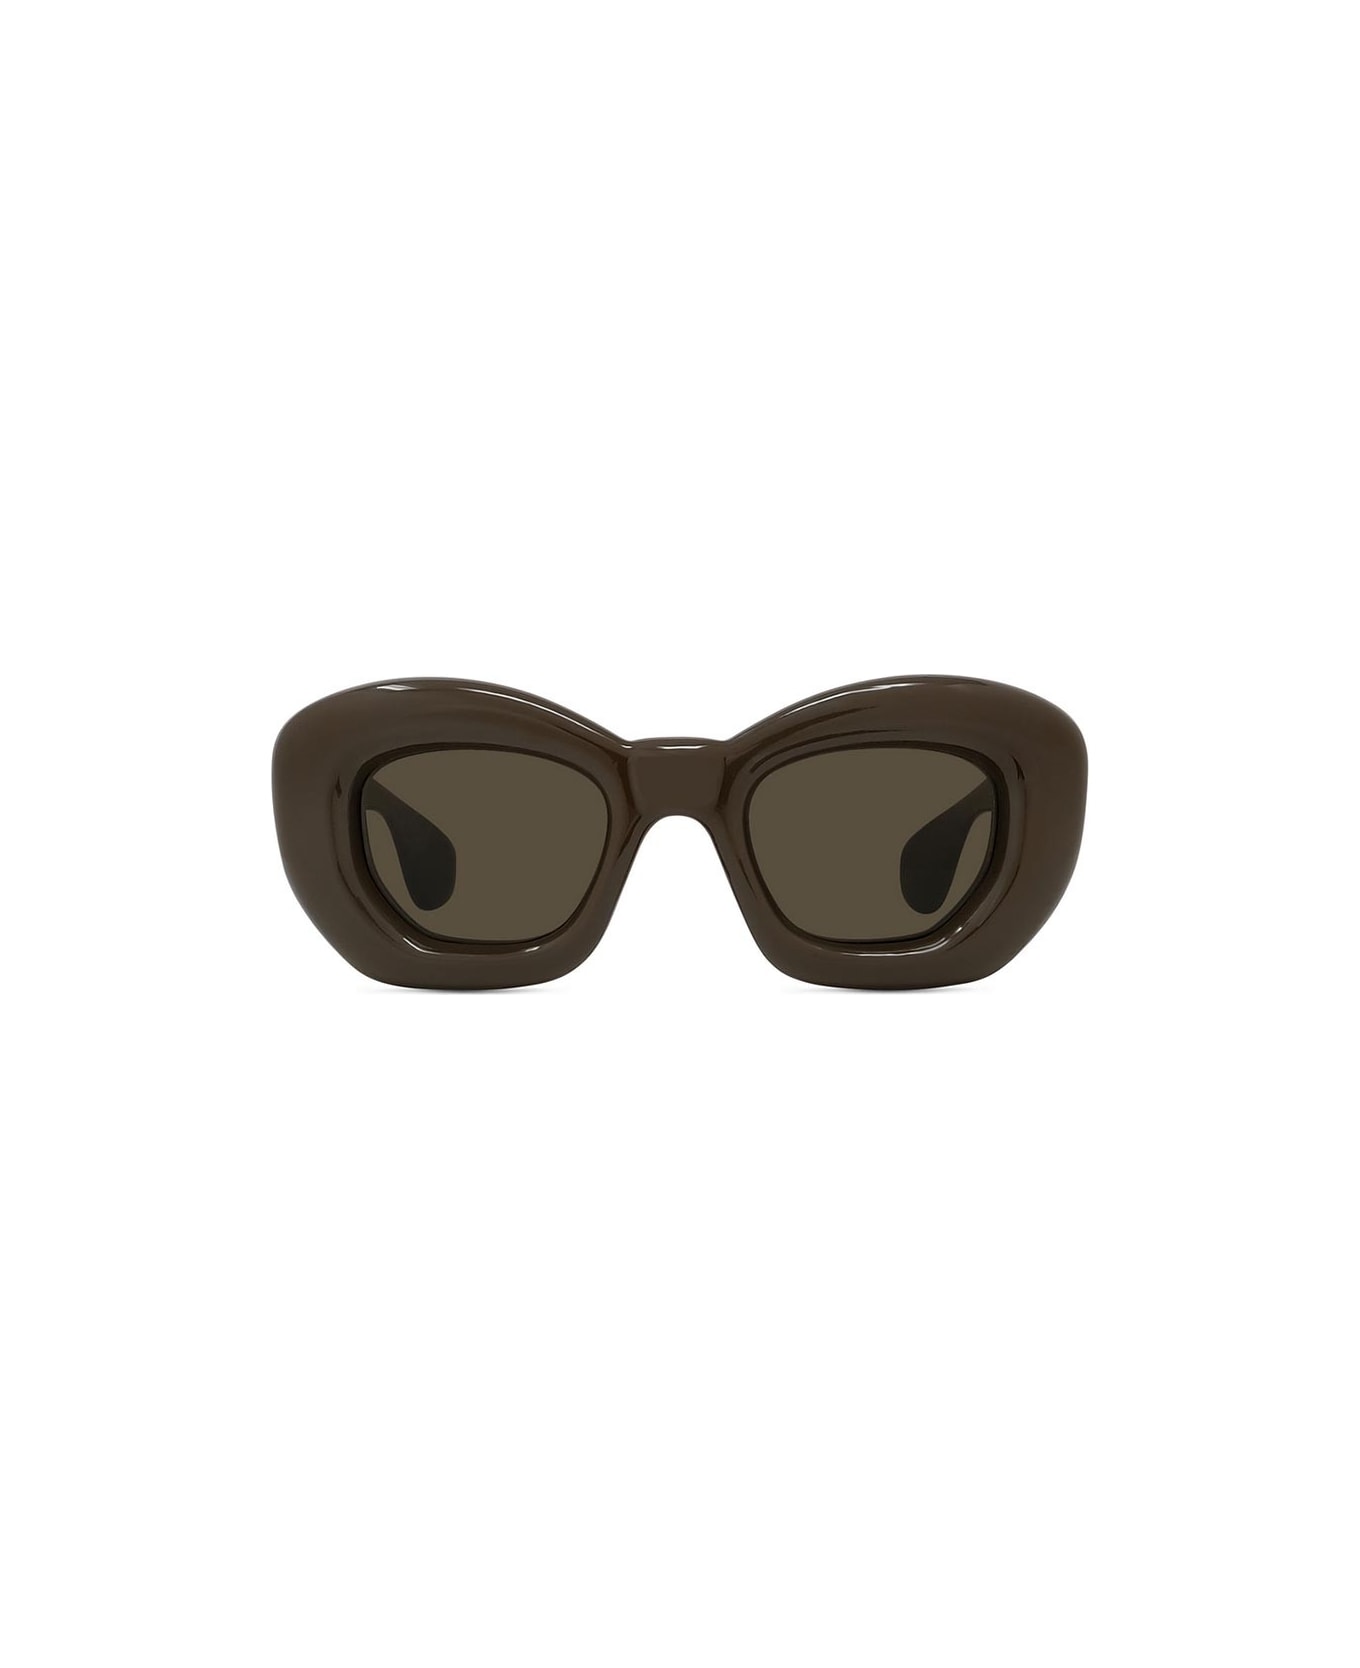 Loewe EYEWEAR Sunglasses - Marrone/Marrone